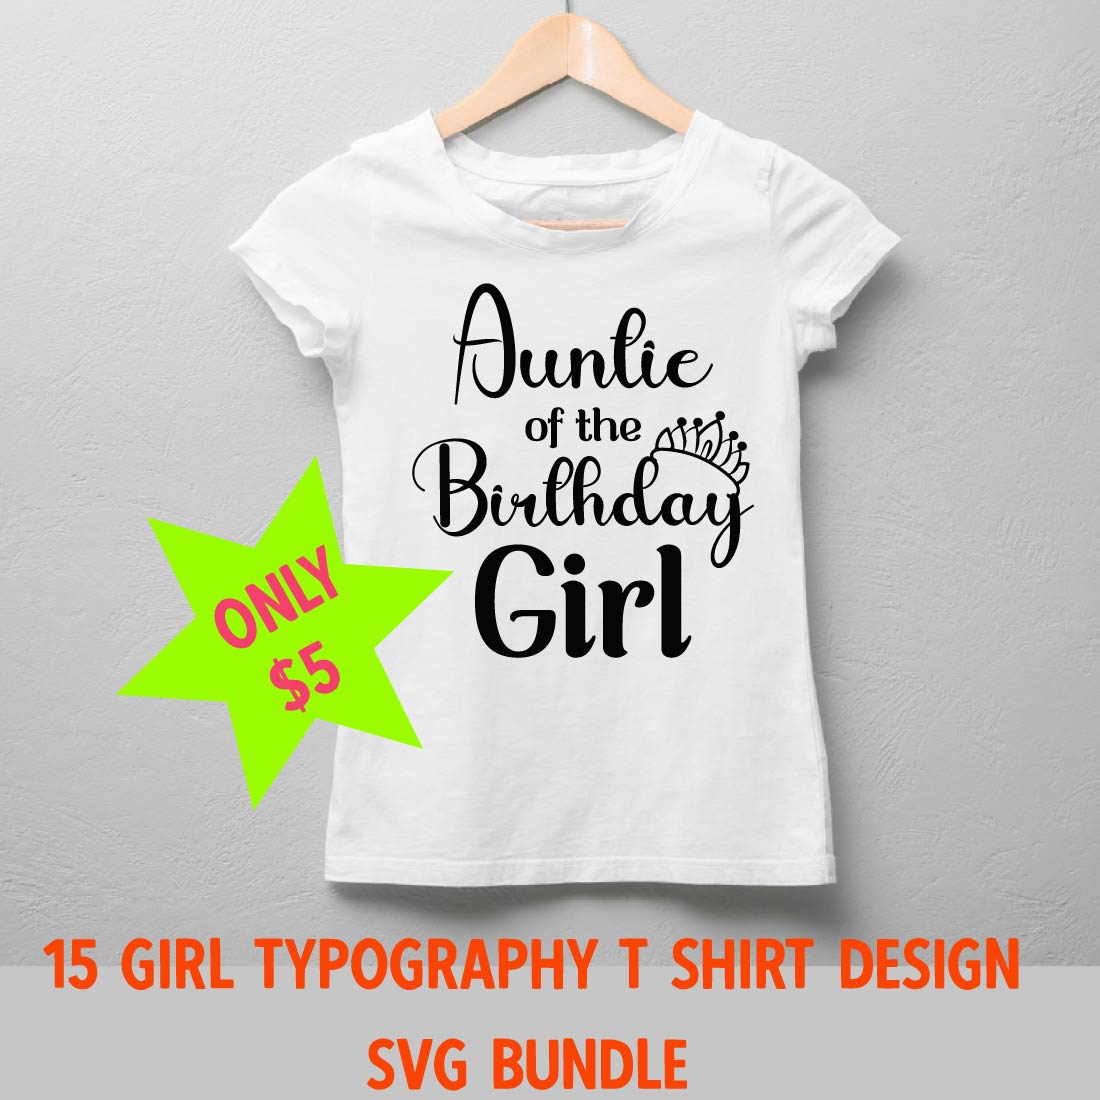 T-shirt Girl Typography Design SVG Bundle cover image.